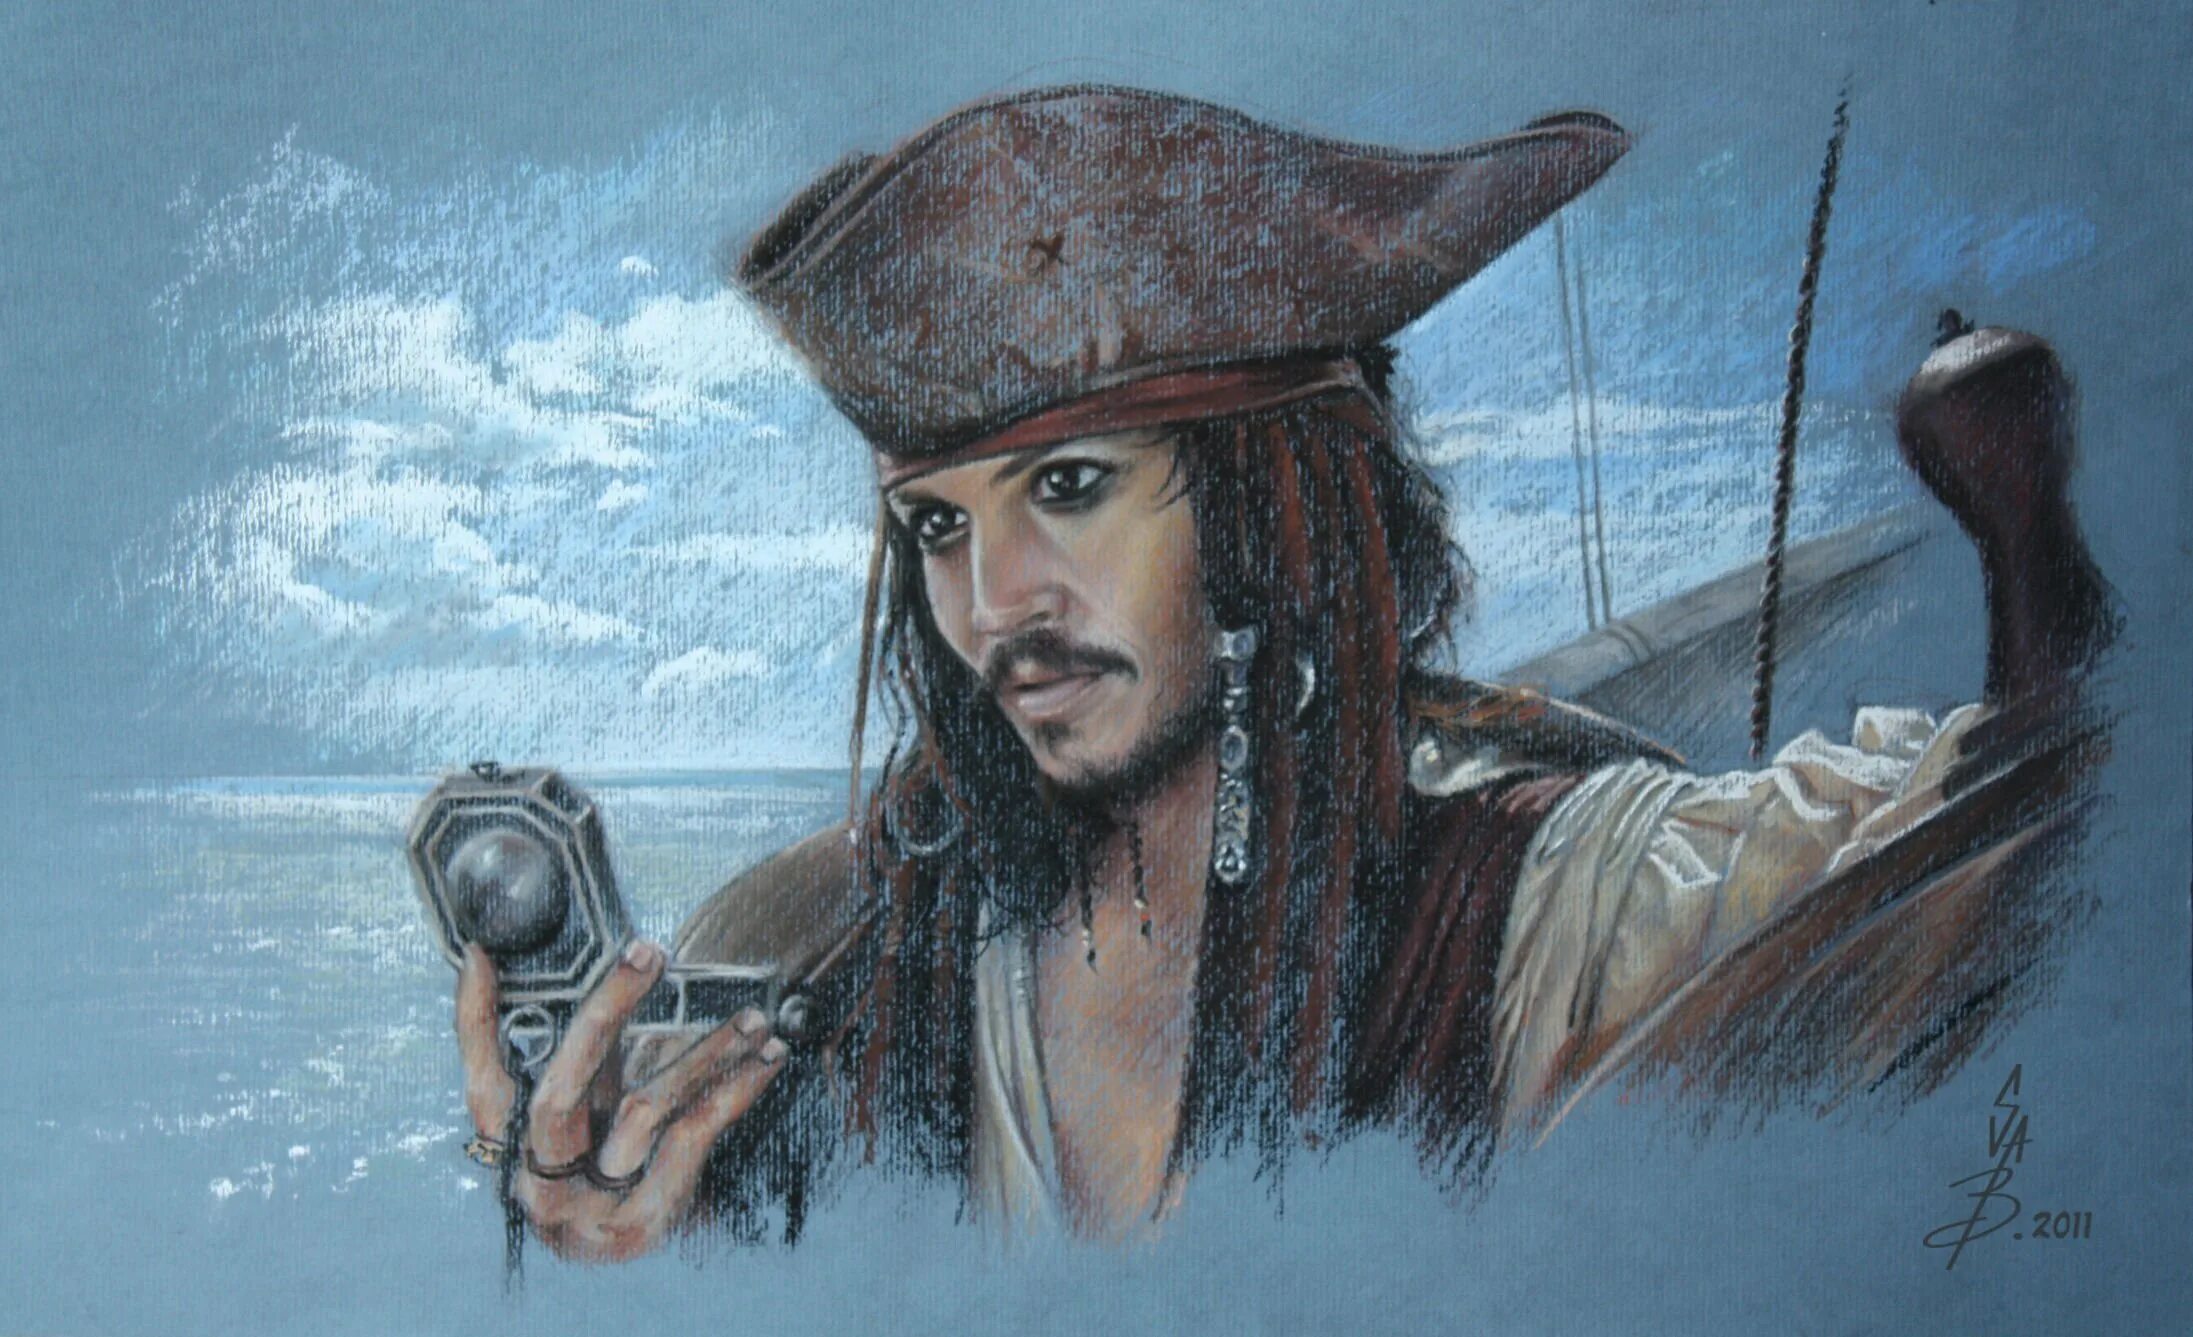 Капитан Джек Воробей черная Жемчужина. Капитан Джек Воробей на корабле. Пират корибеисинго моря. Пираты Карибского моря проклятие черной Жемчужины Джек Воробей.